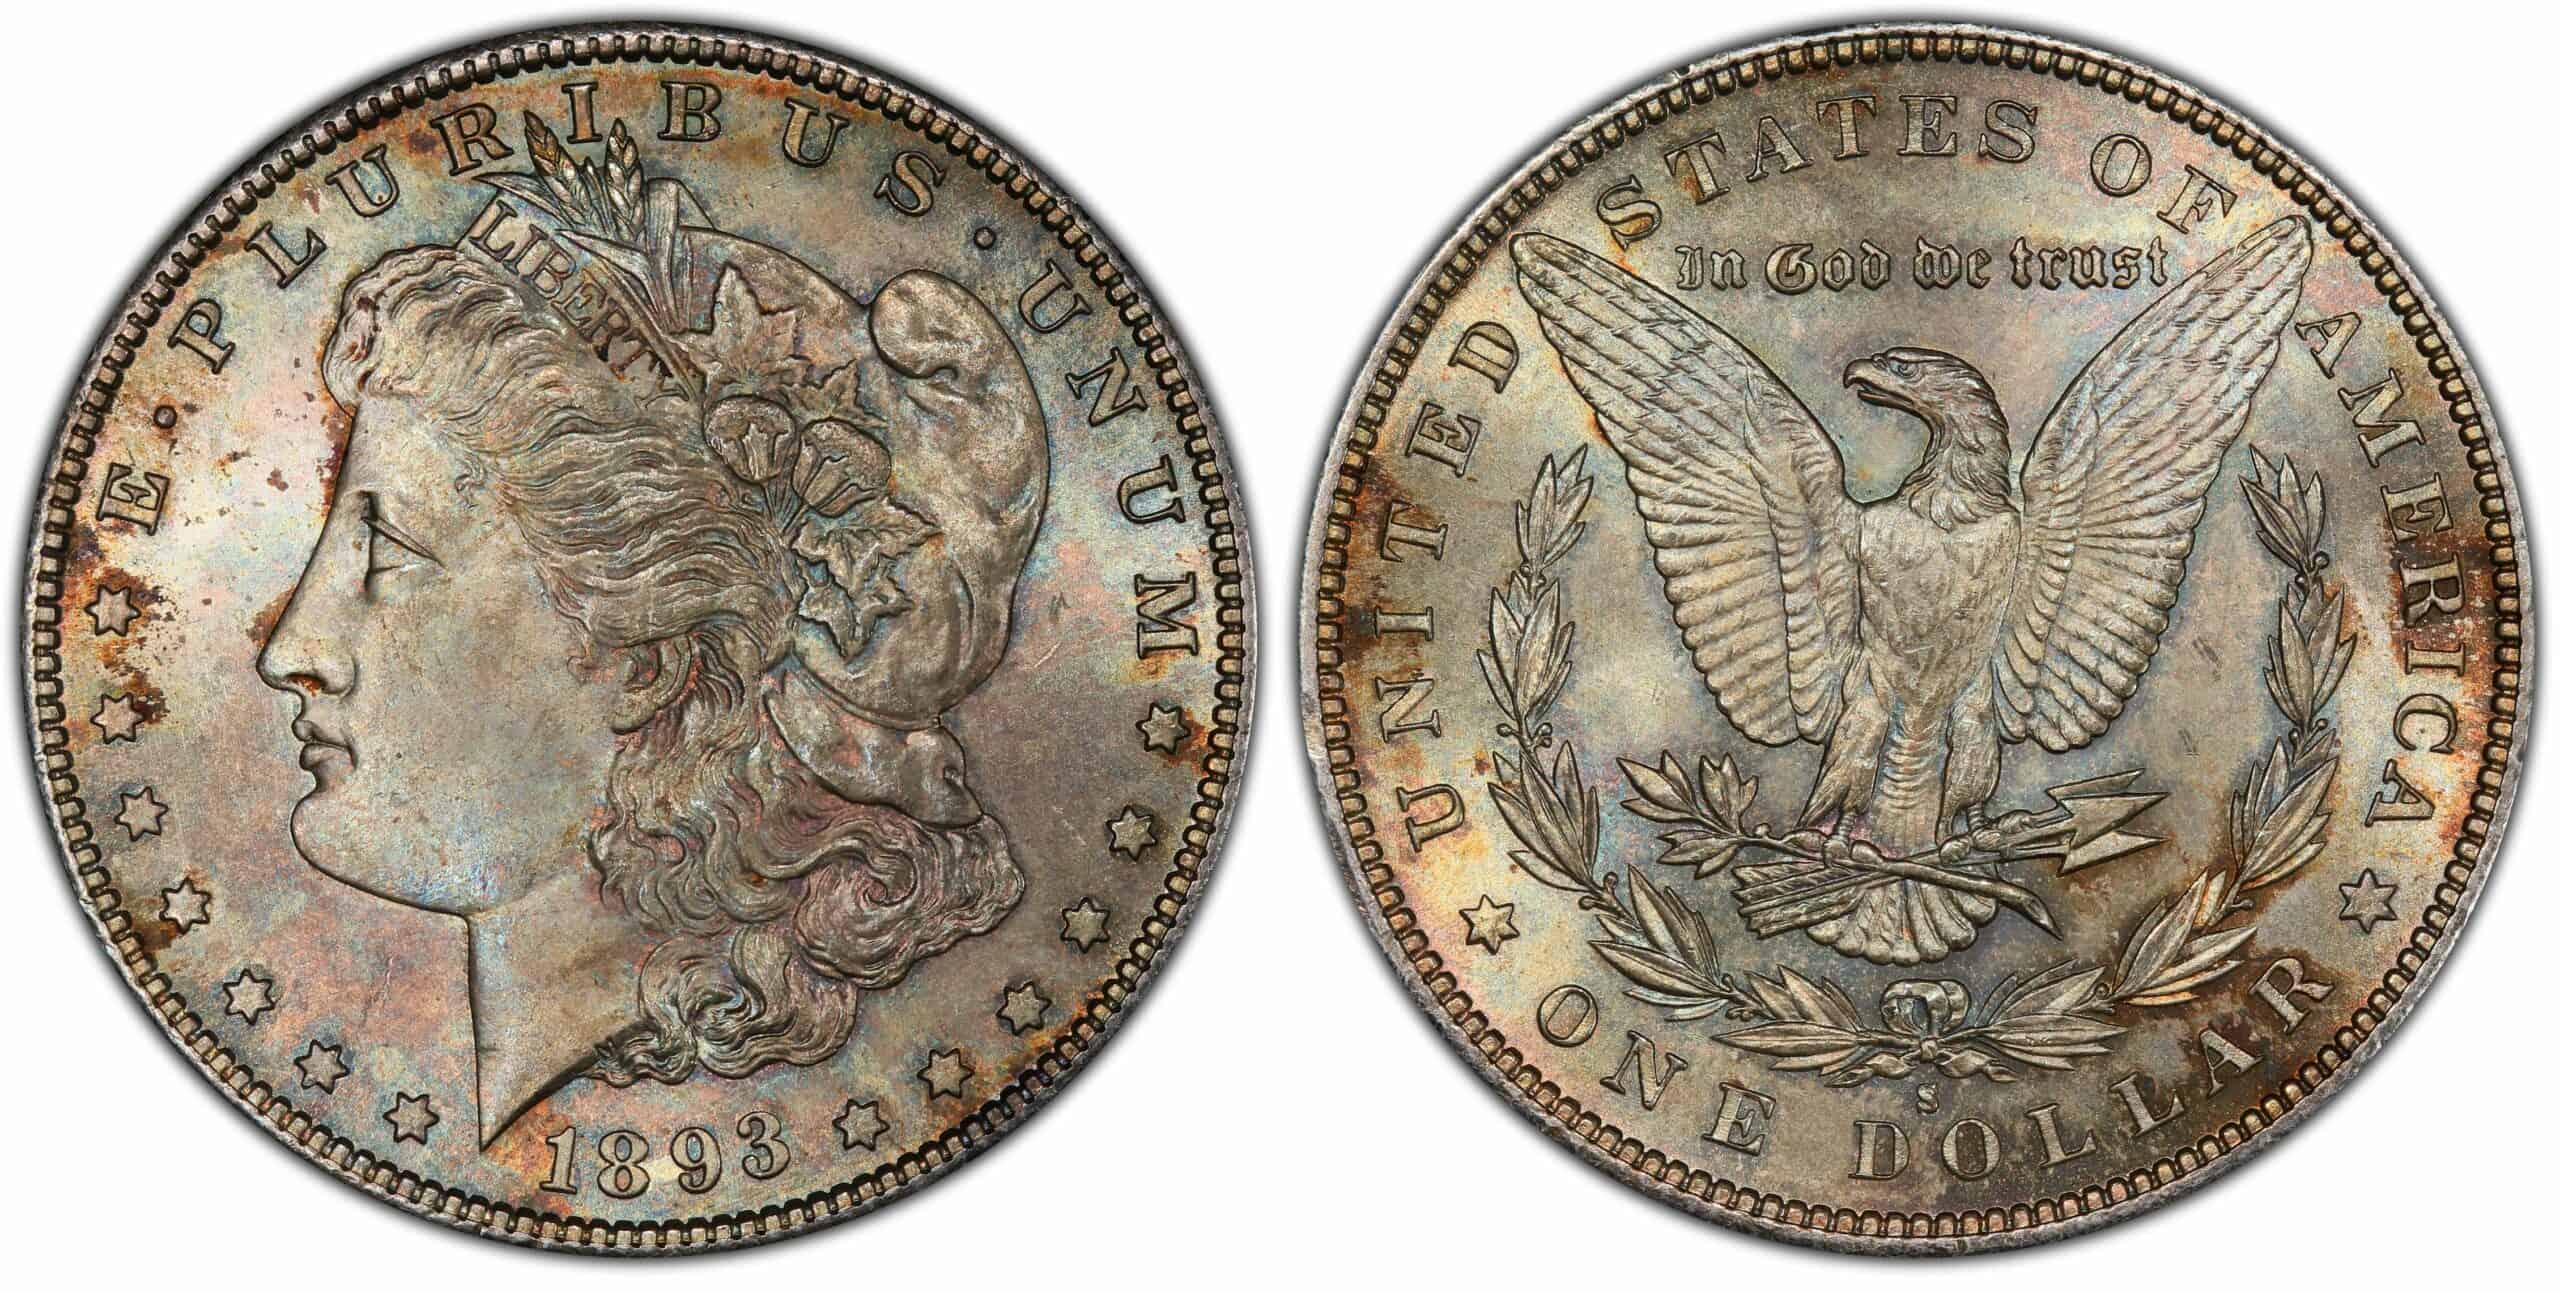 1893 S Morgan Silver Dollar